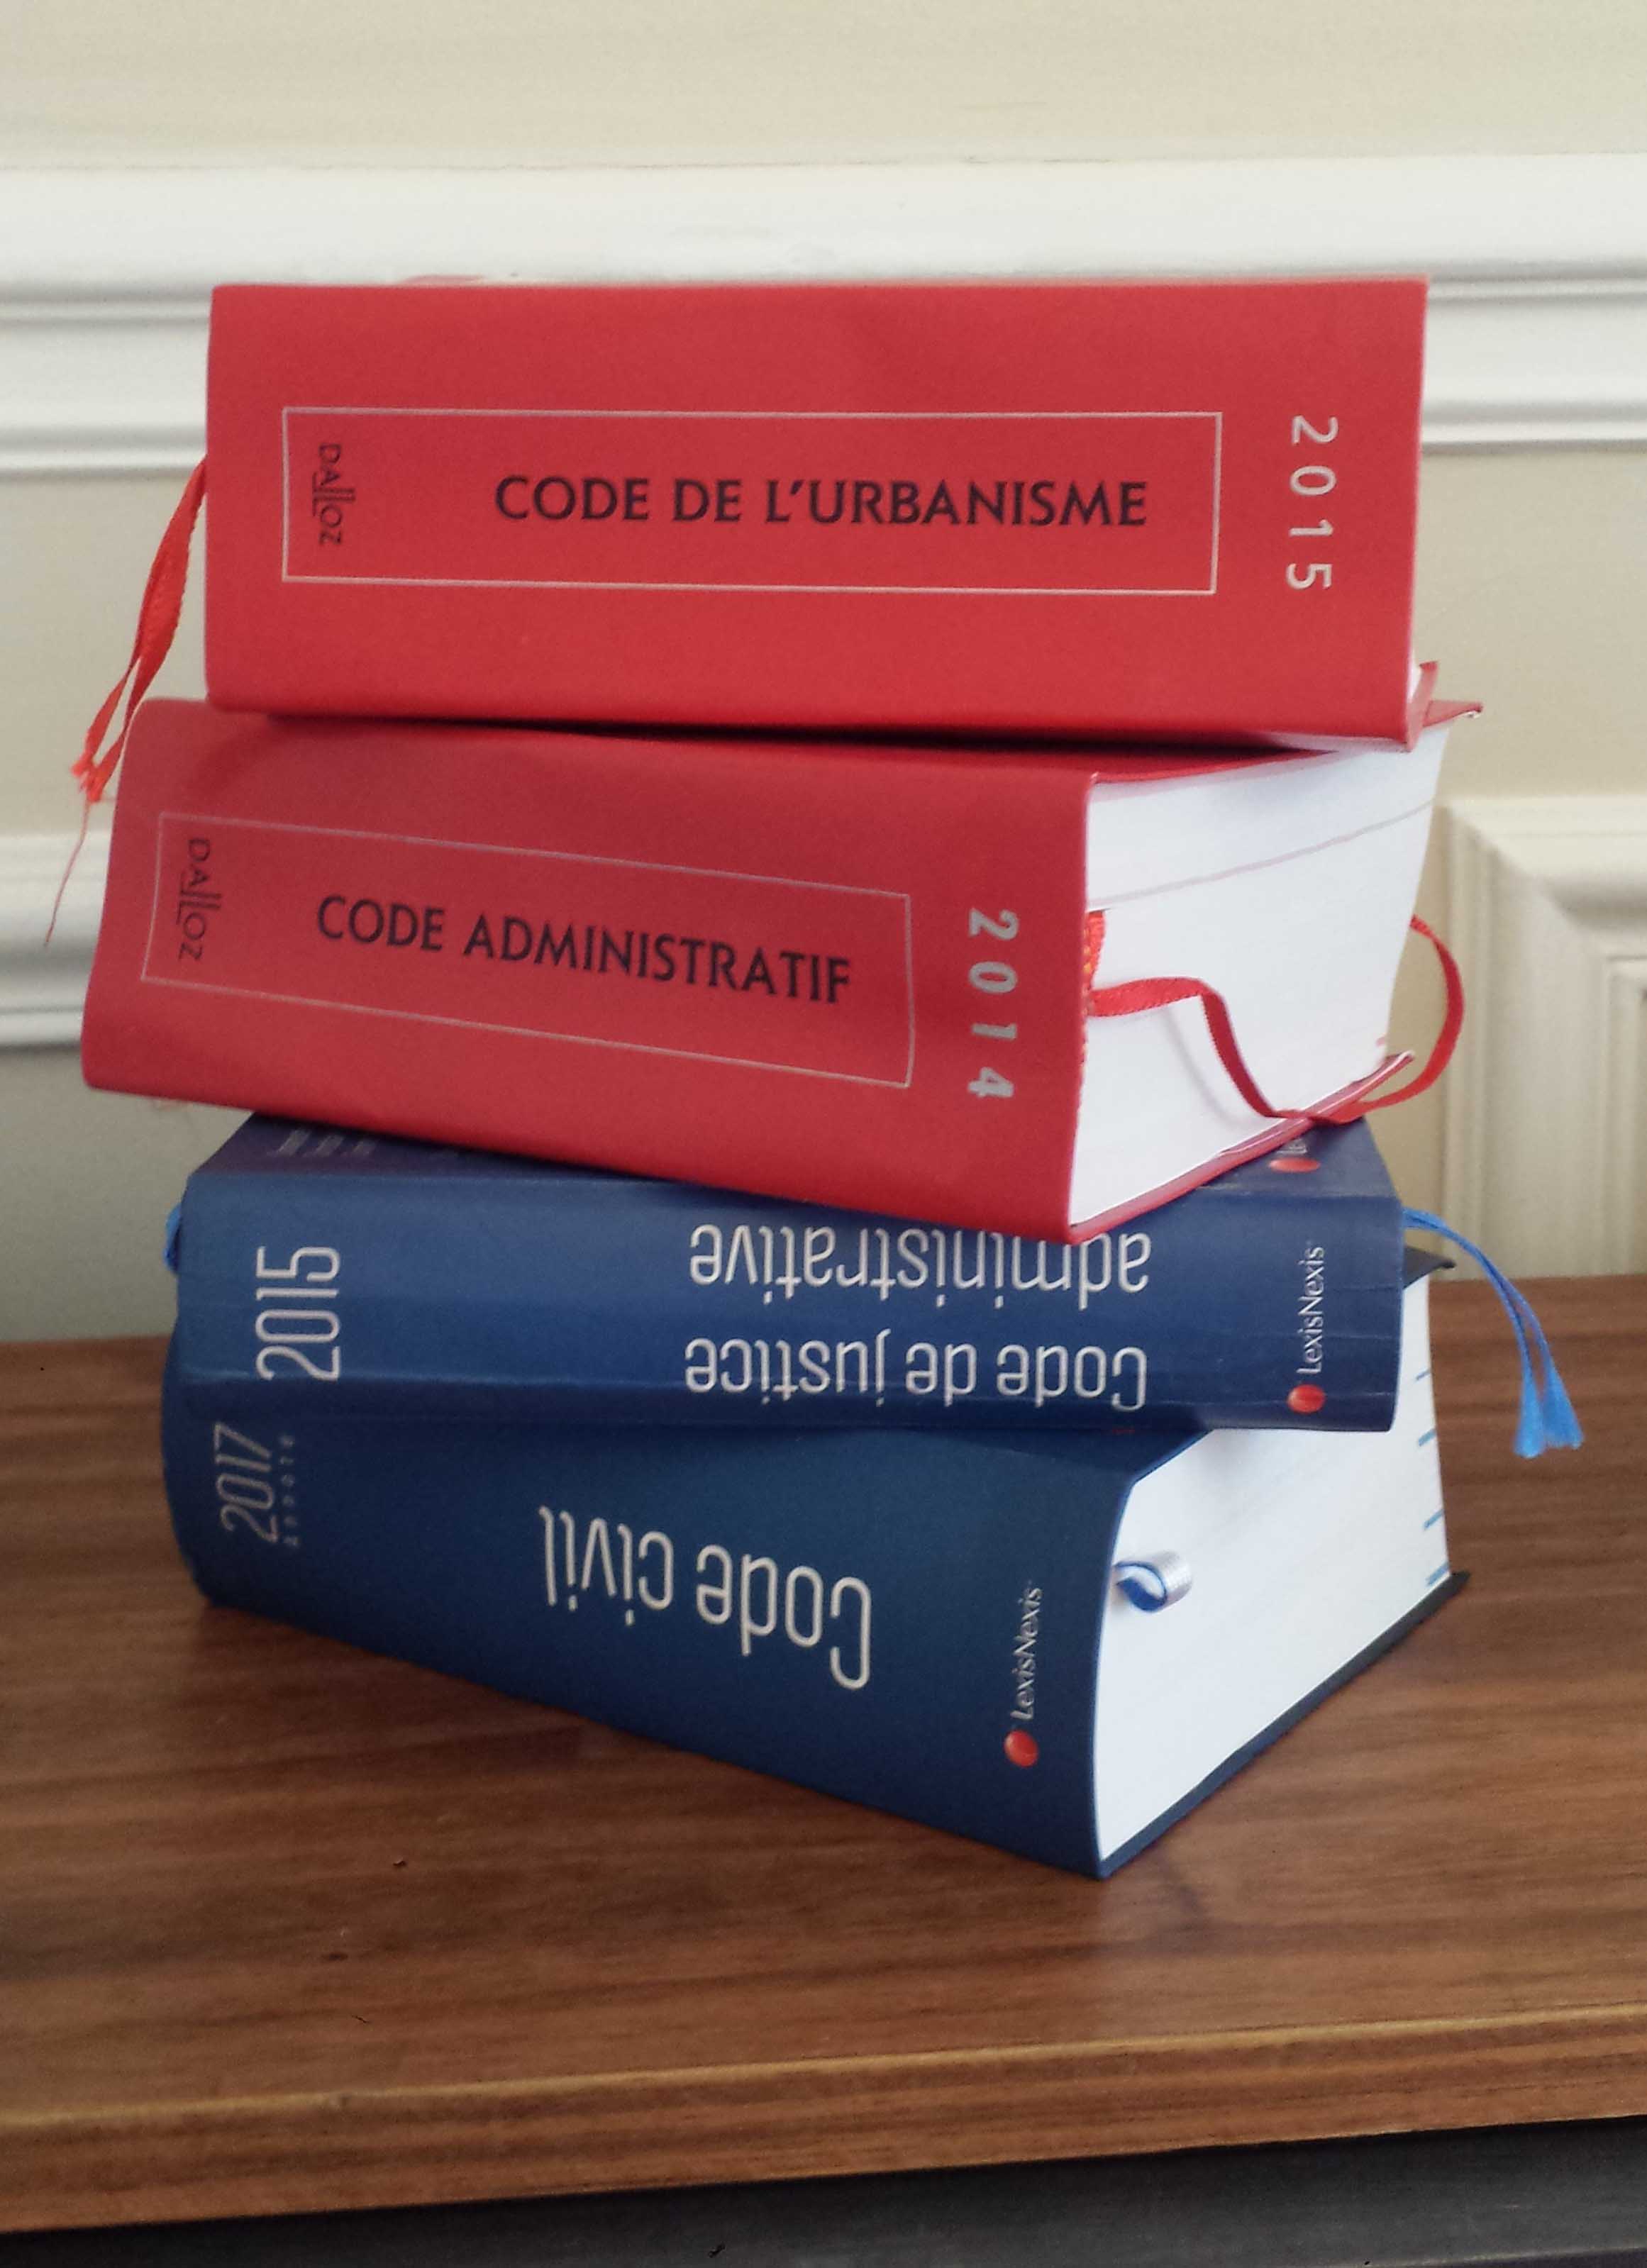 Code de l'urbanisme - Code administratif - Code civil - Cabinet Iroise Avocats